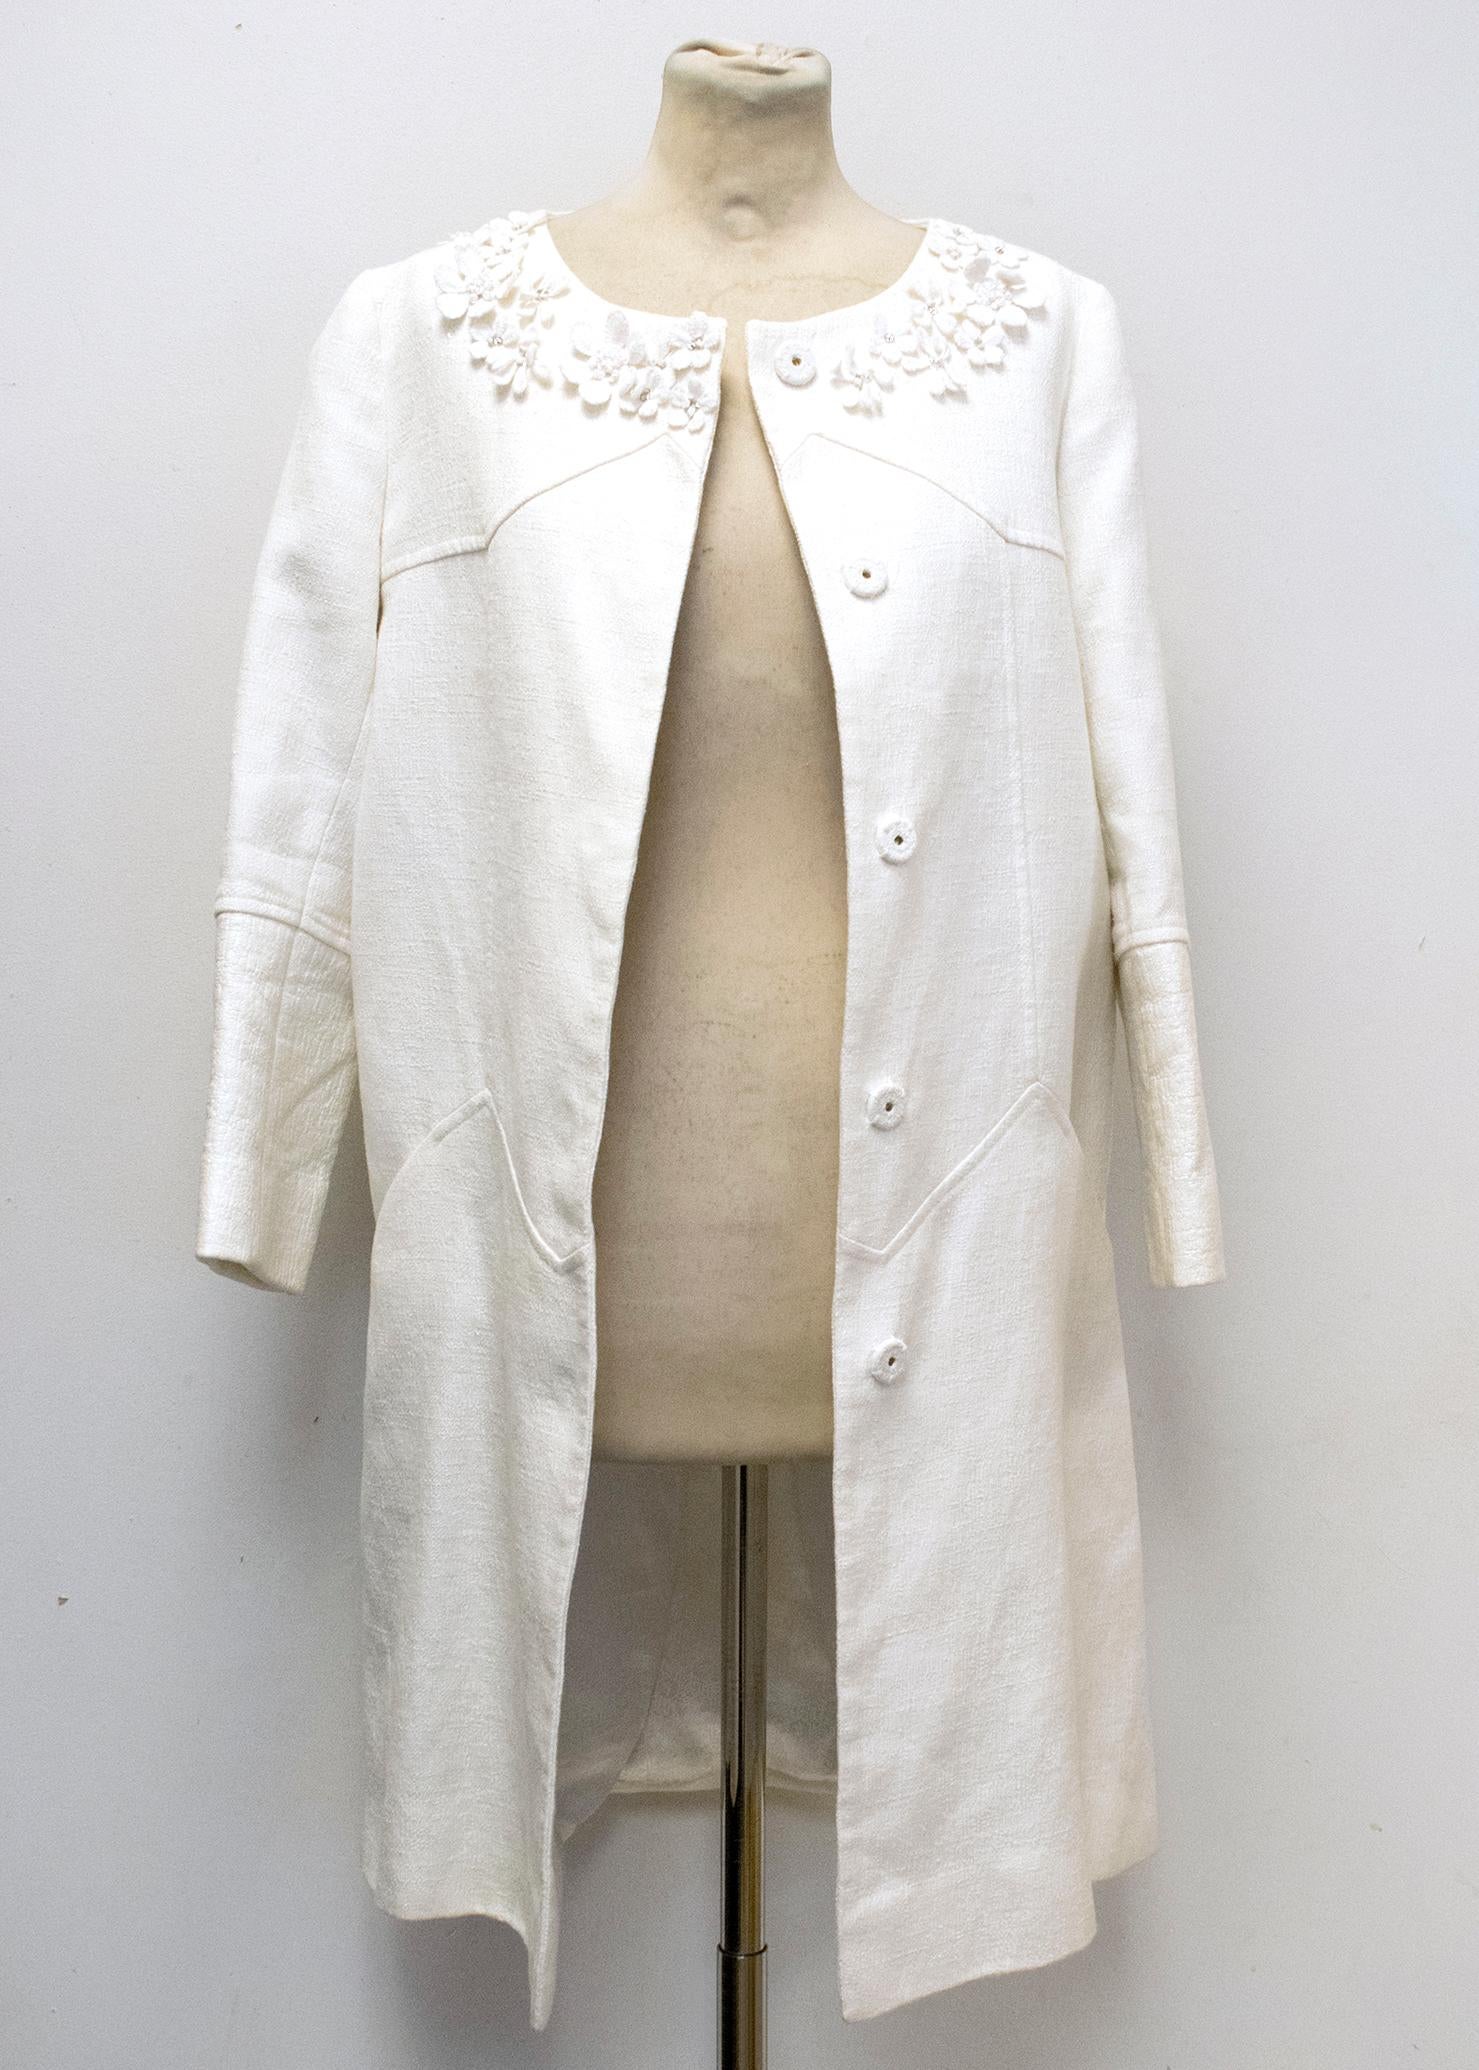 Women's Matthew Williamson White Cotton Linen Summer Coat - Size US 2-4 For Sale